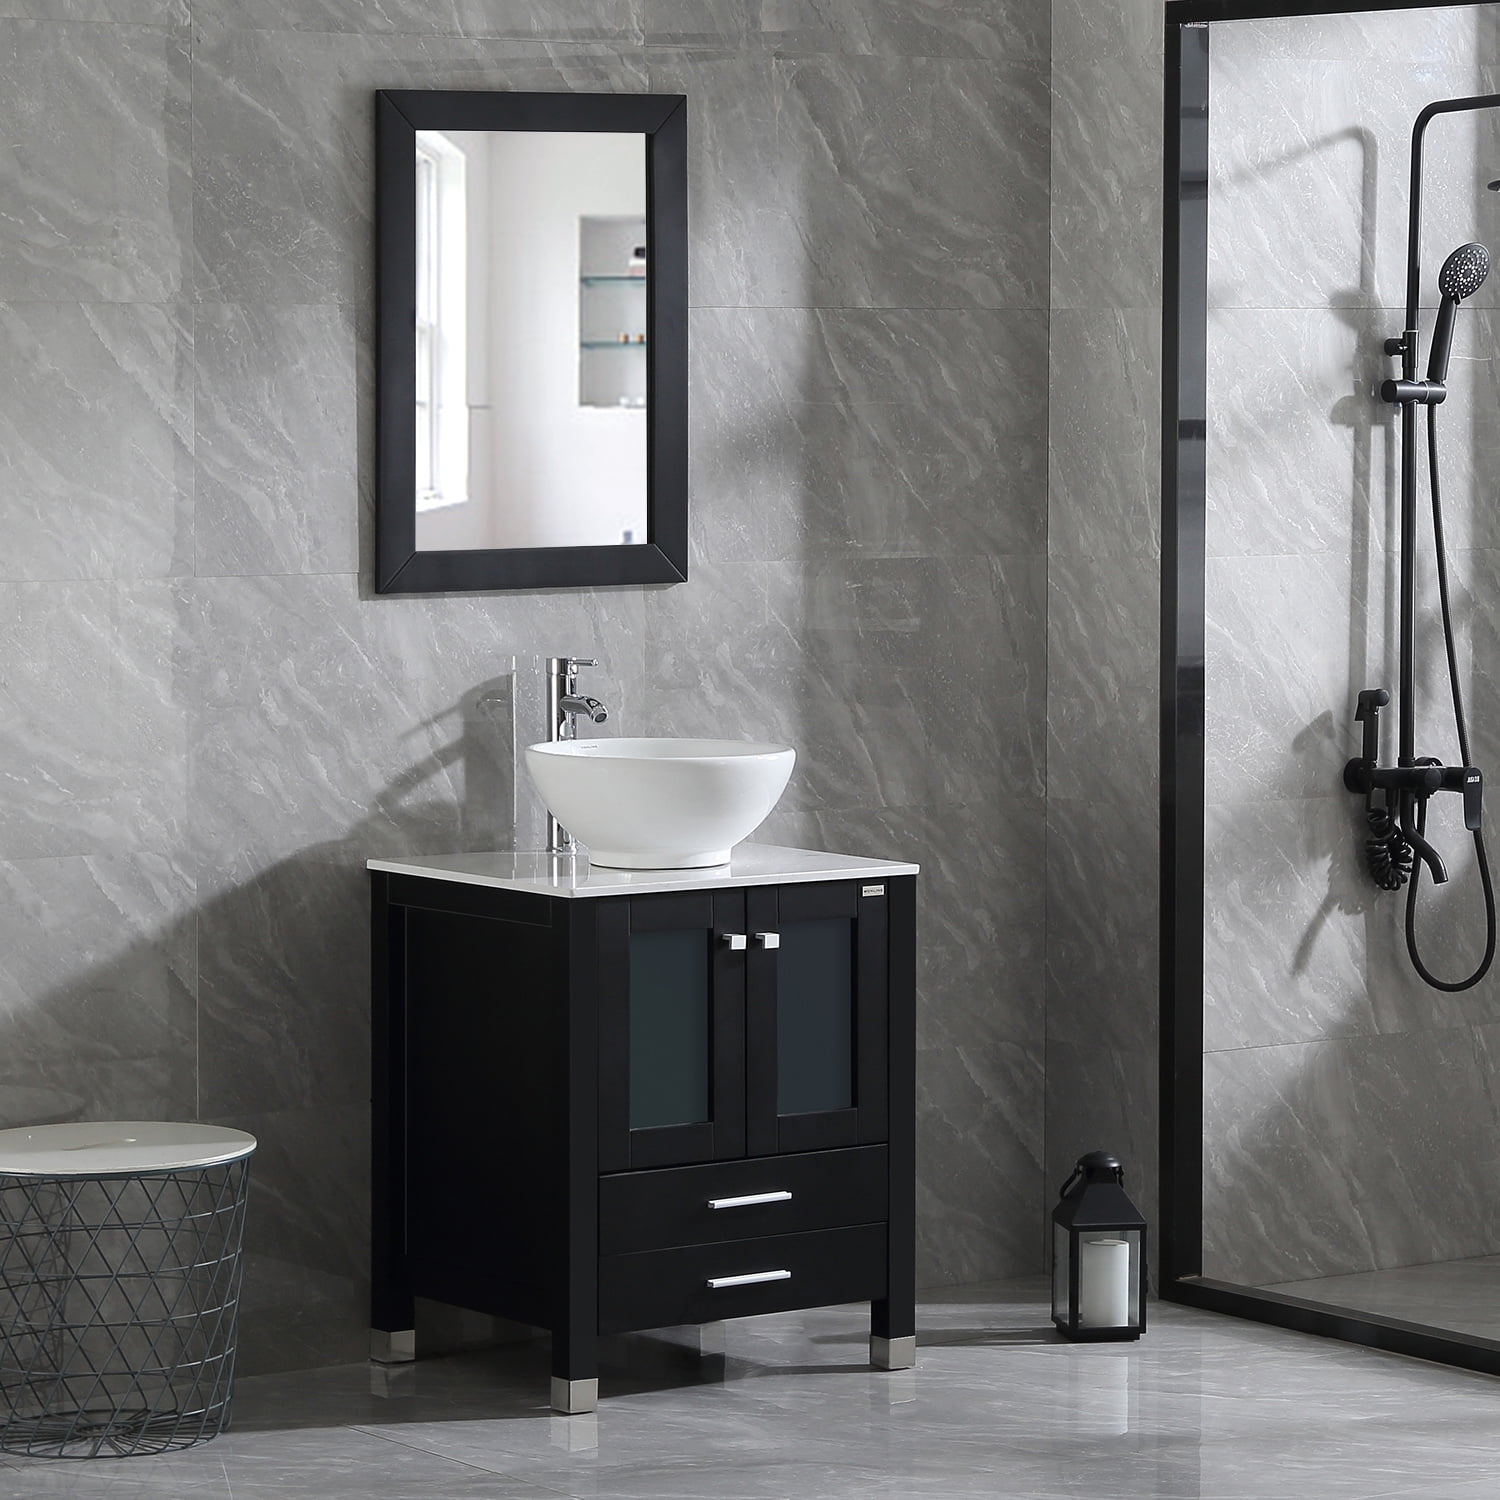 Bathroom Vanity Combo W/ Mirror 24 Inch Round Square Vessel Sink Faucet W/ Drain 